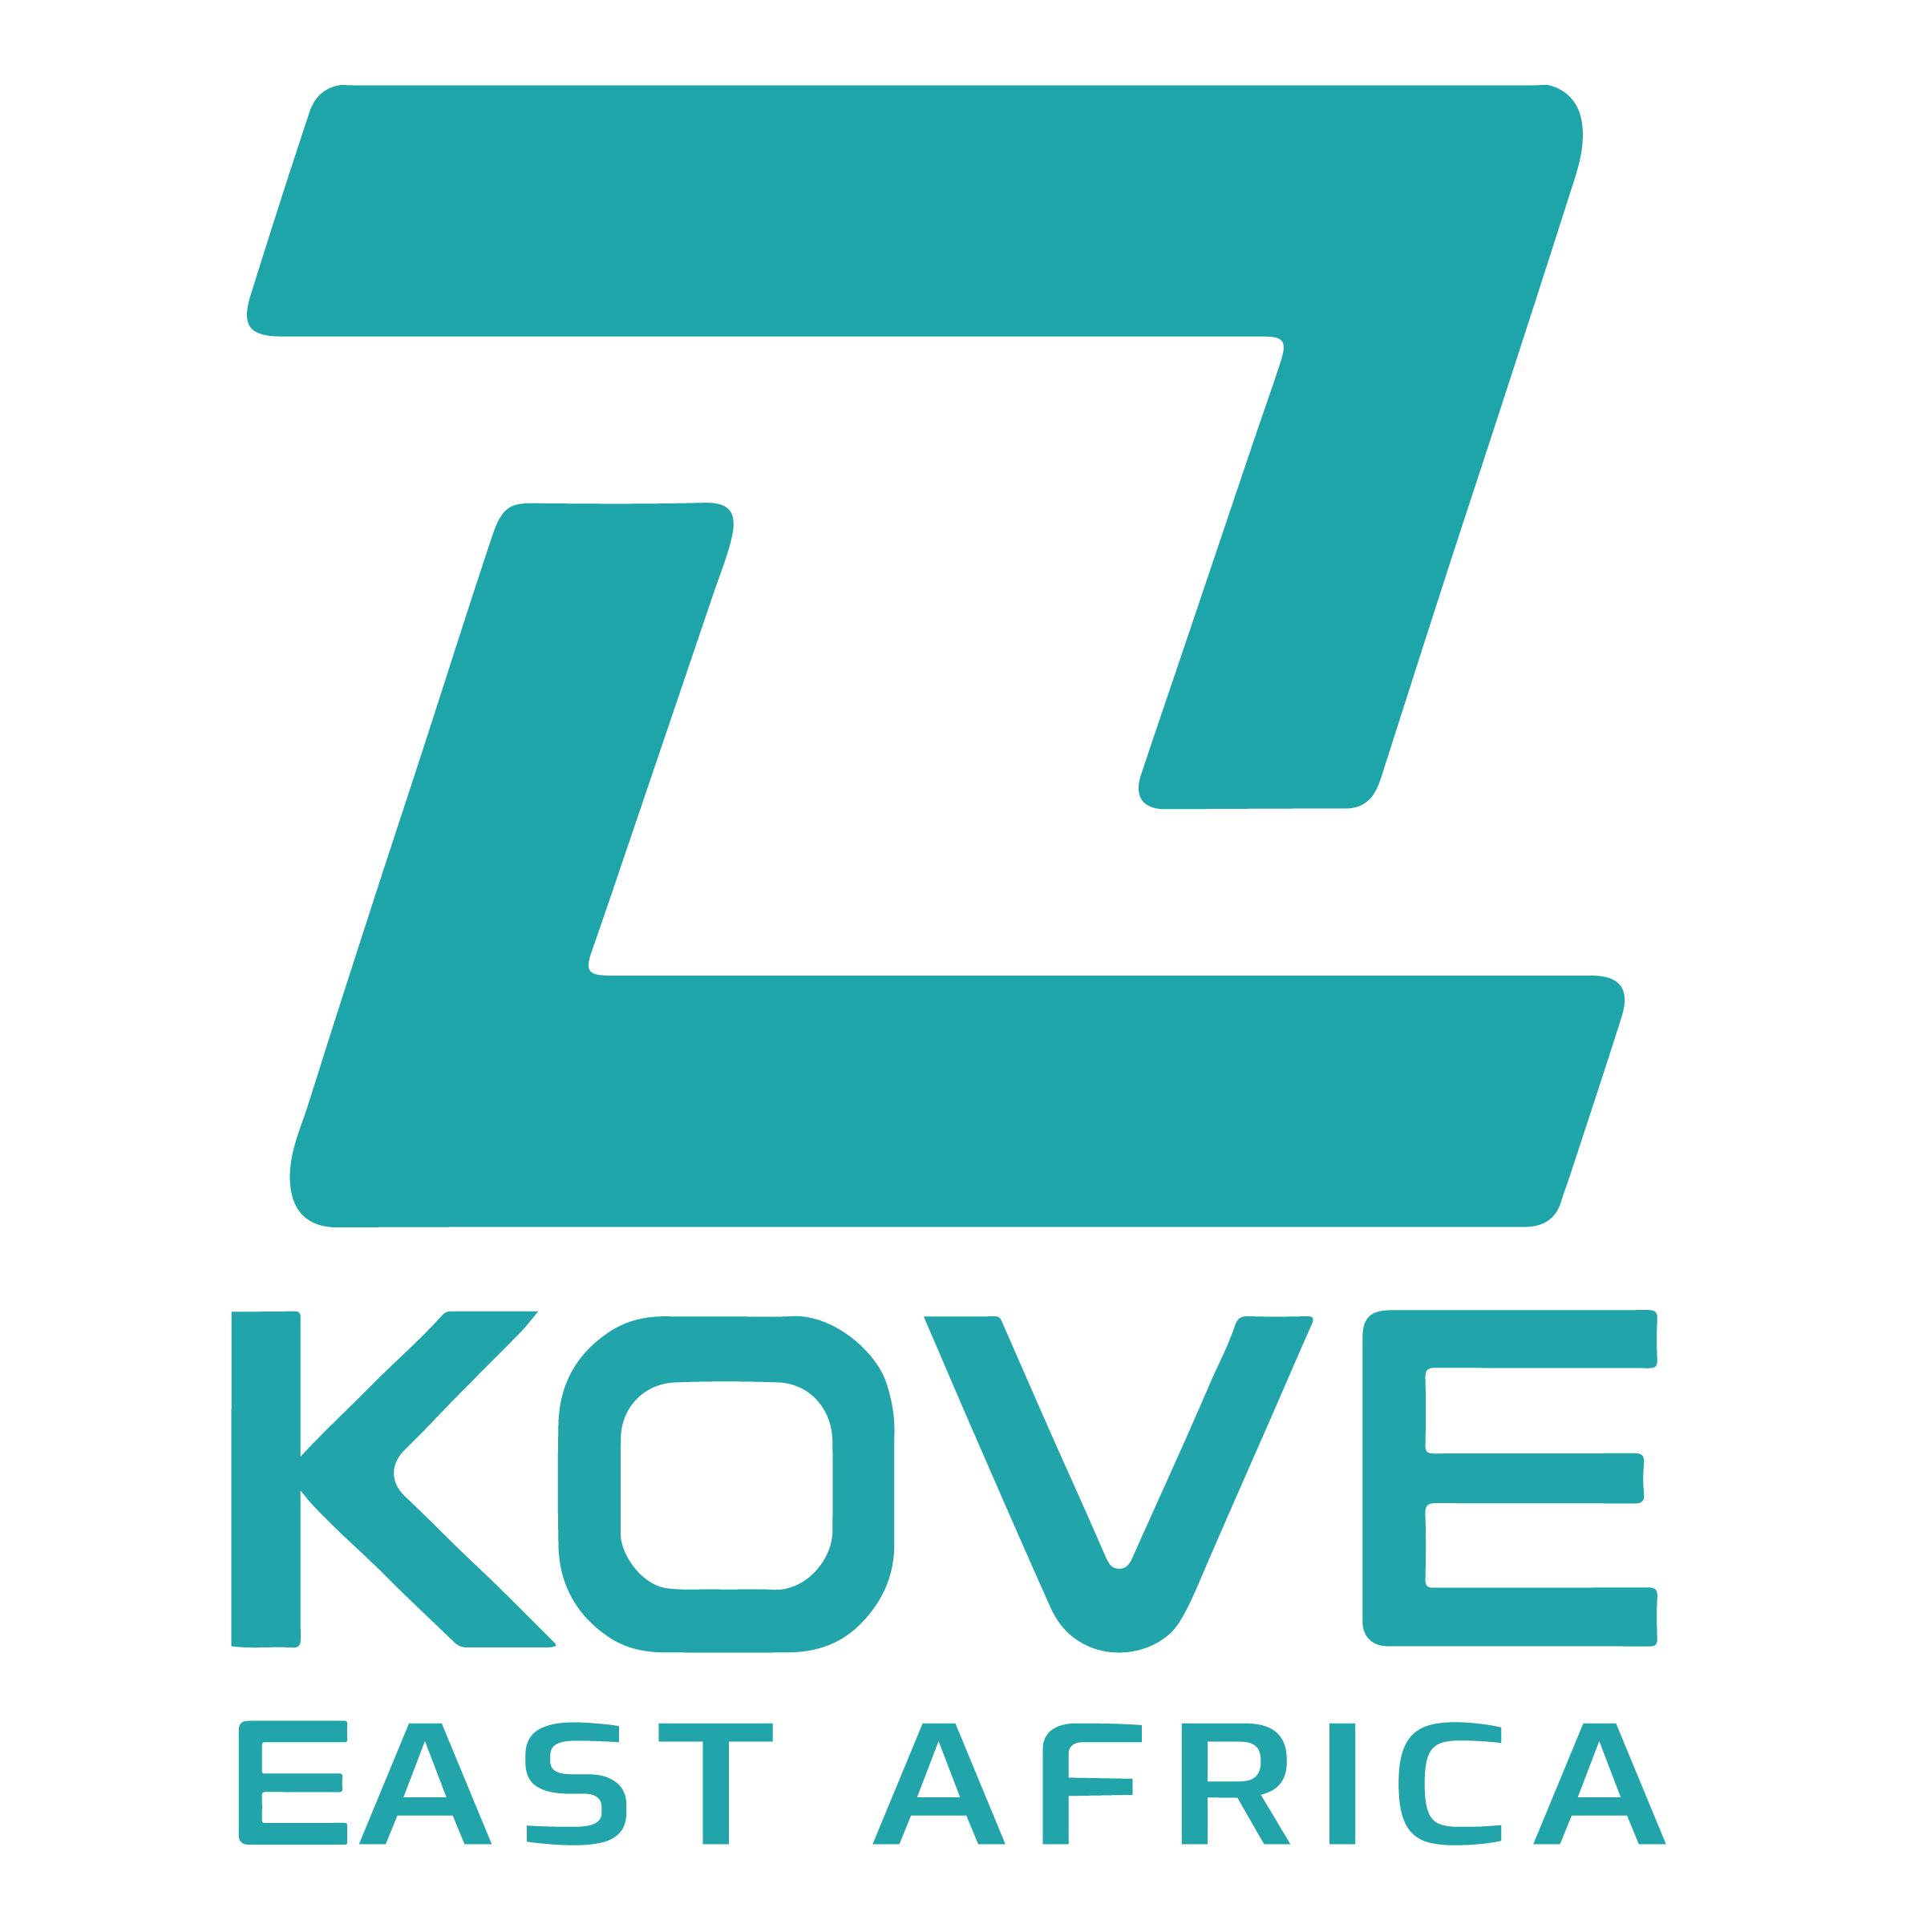 Kove East Africa